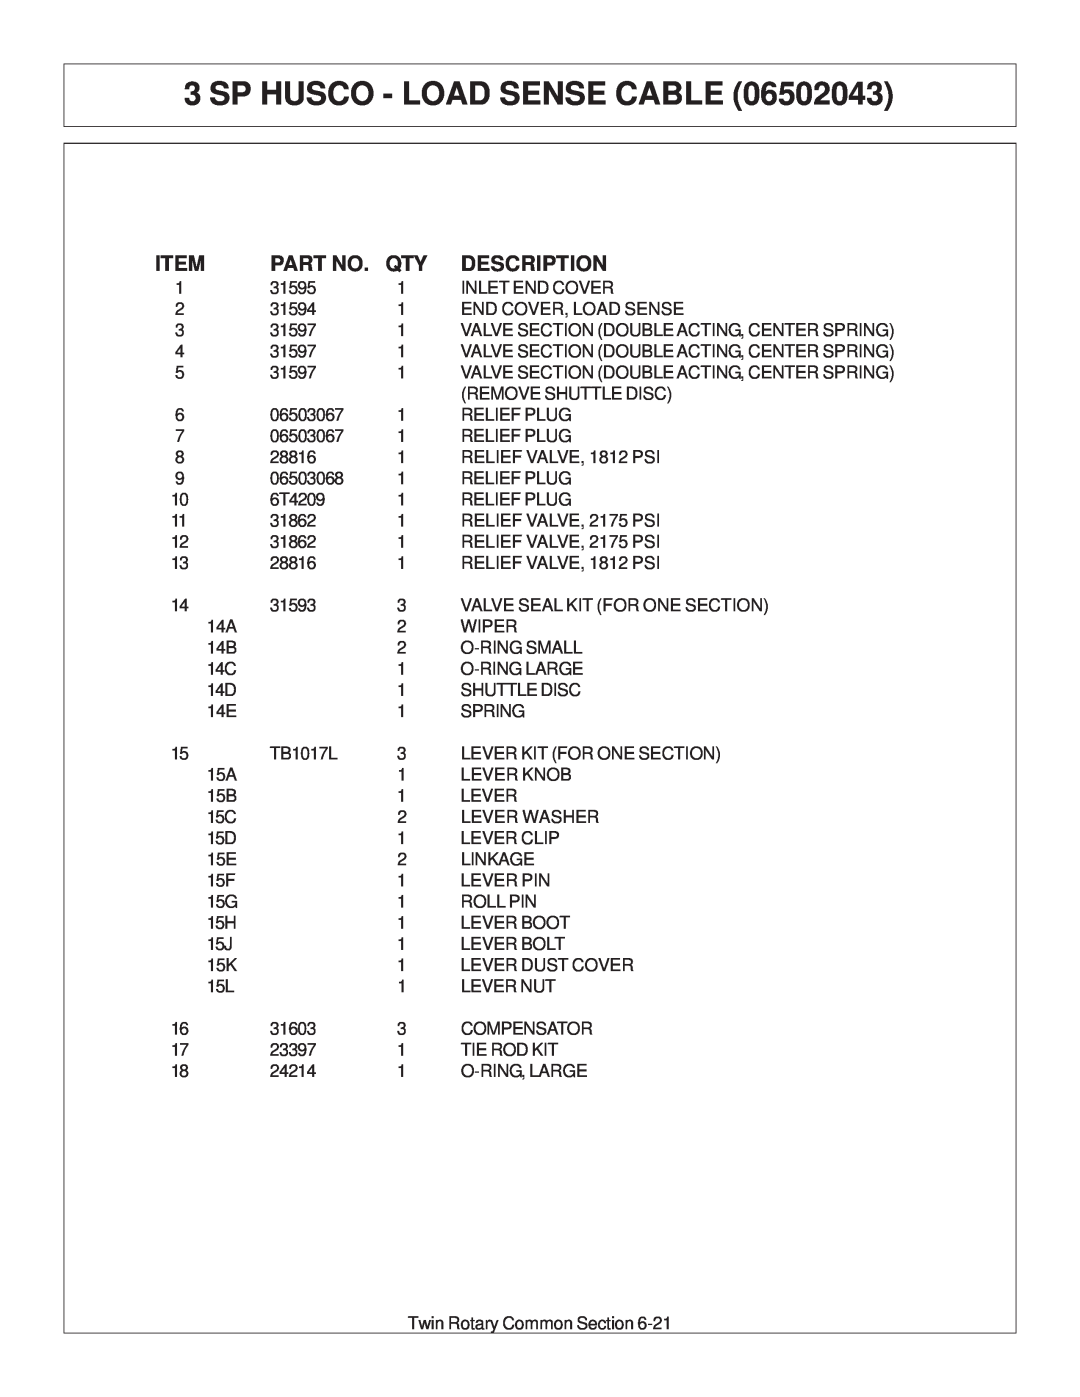 Tiger Products Co., Ltd 6020009 manual Sp Husco - Load Sense Cable, Description 